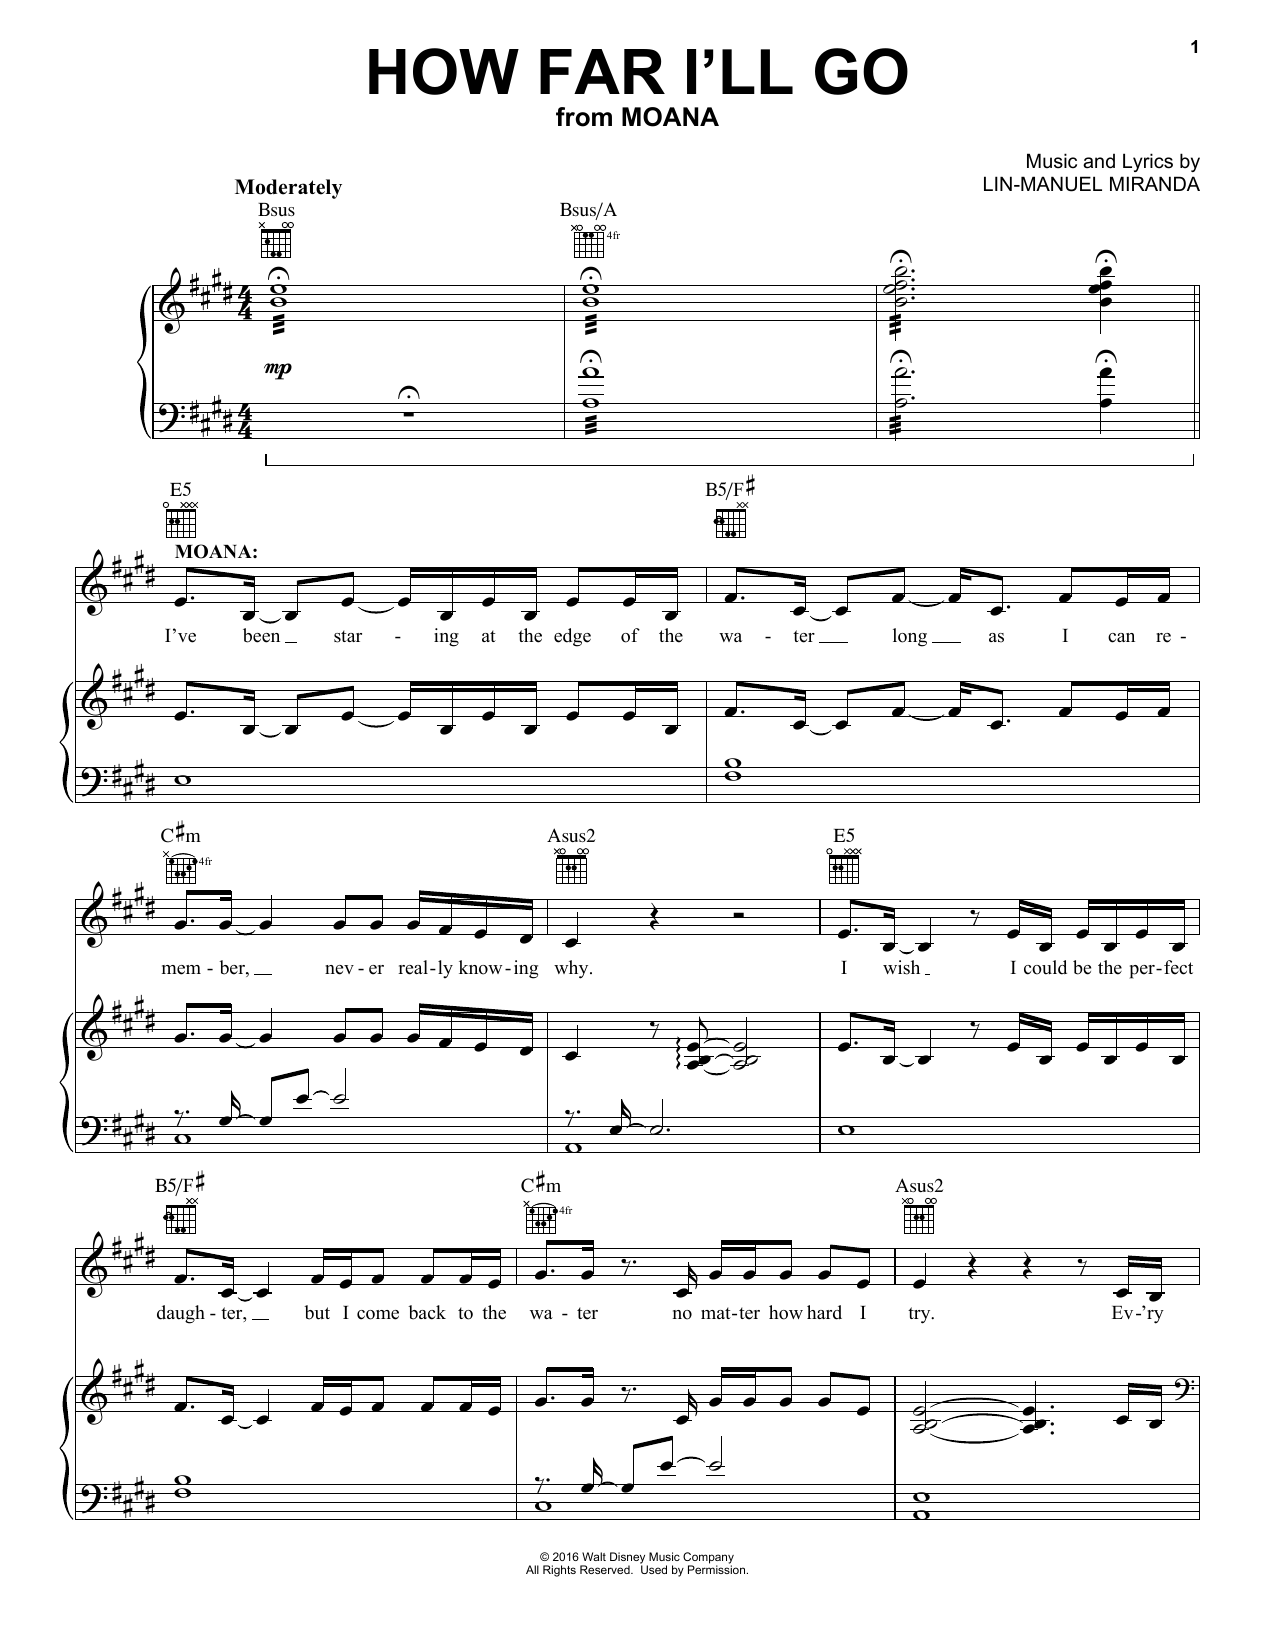 Ryg, ryg, ryg del ristet brød Nebu Lin-Manuel Miranda "How Far I'll Go (from Moana)" Sheet Music PDF Notes,  Chords | Children Score Ukulele Download Printable. SKU: 179466